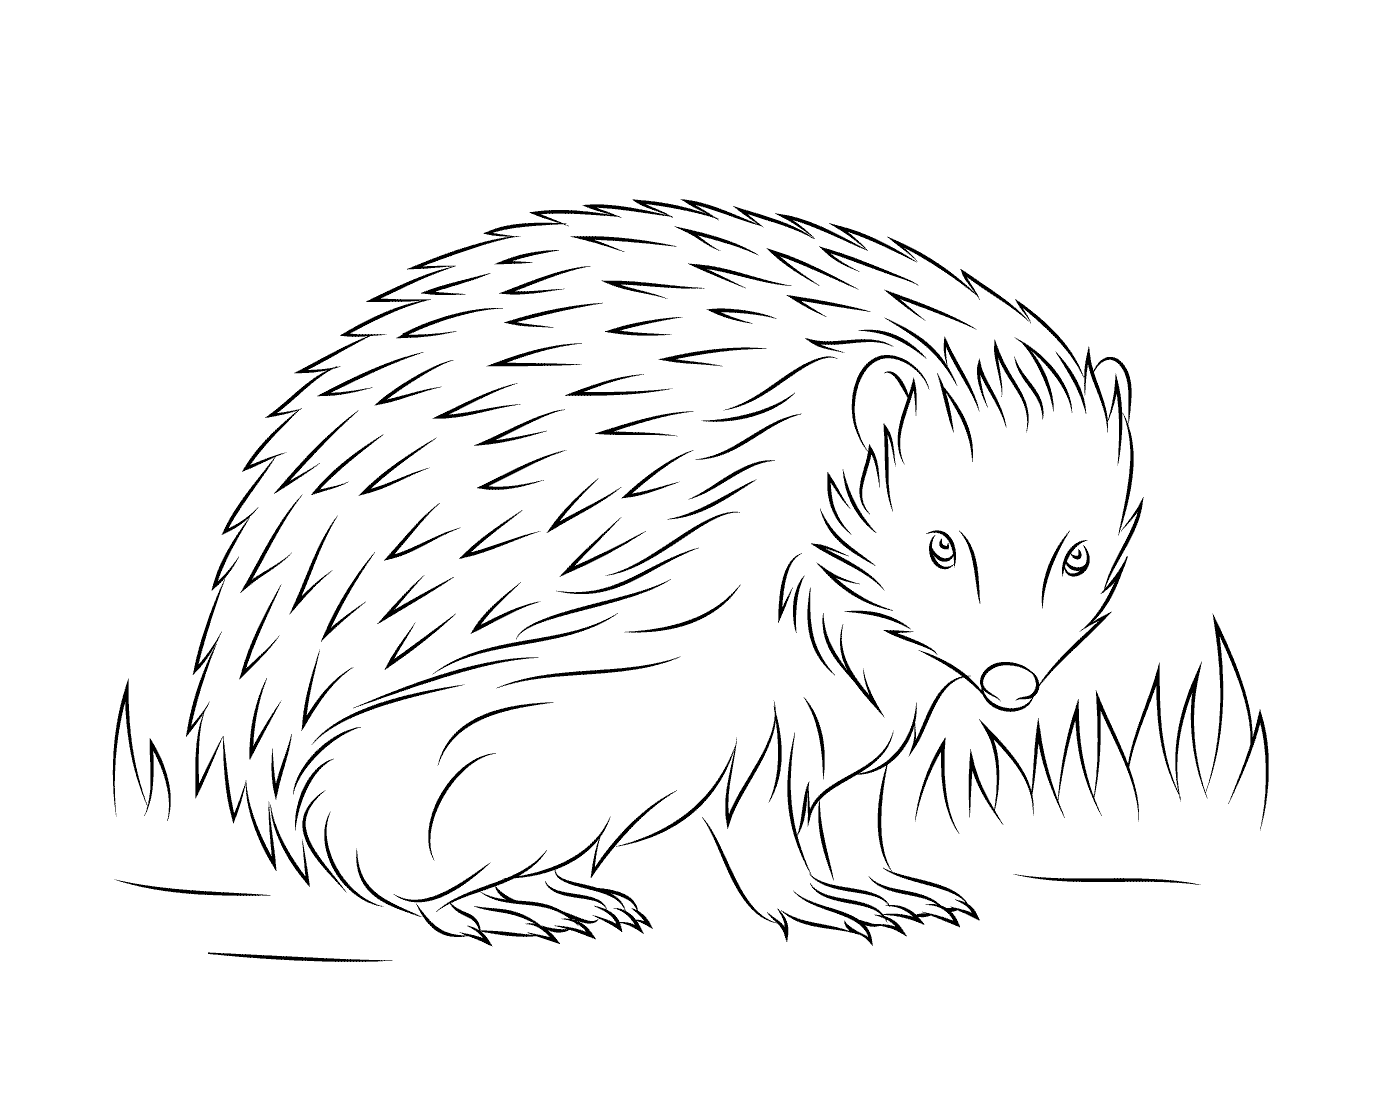  Hedgehog digging burrows 